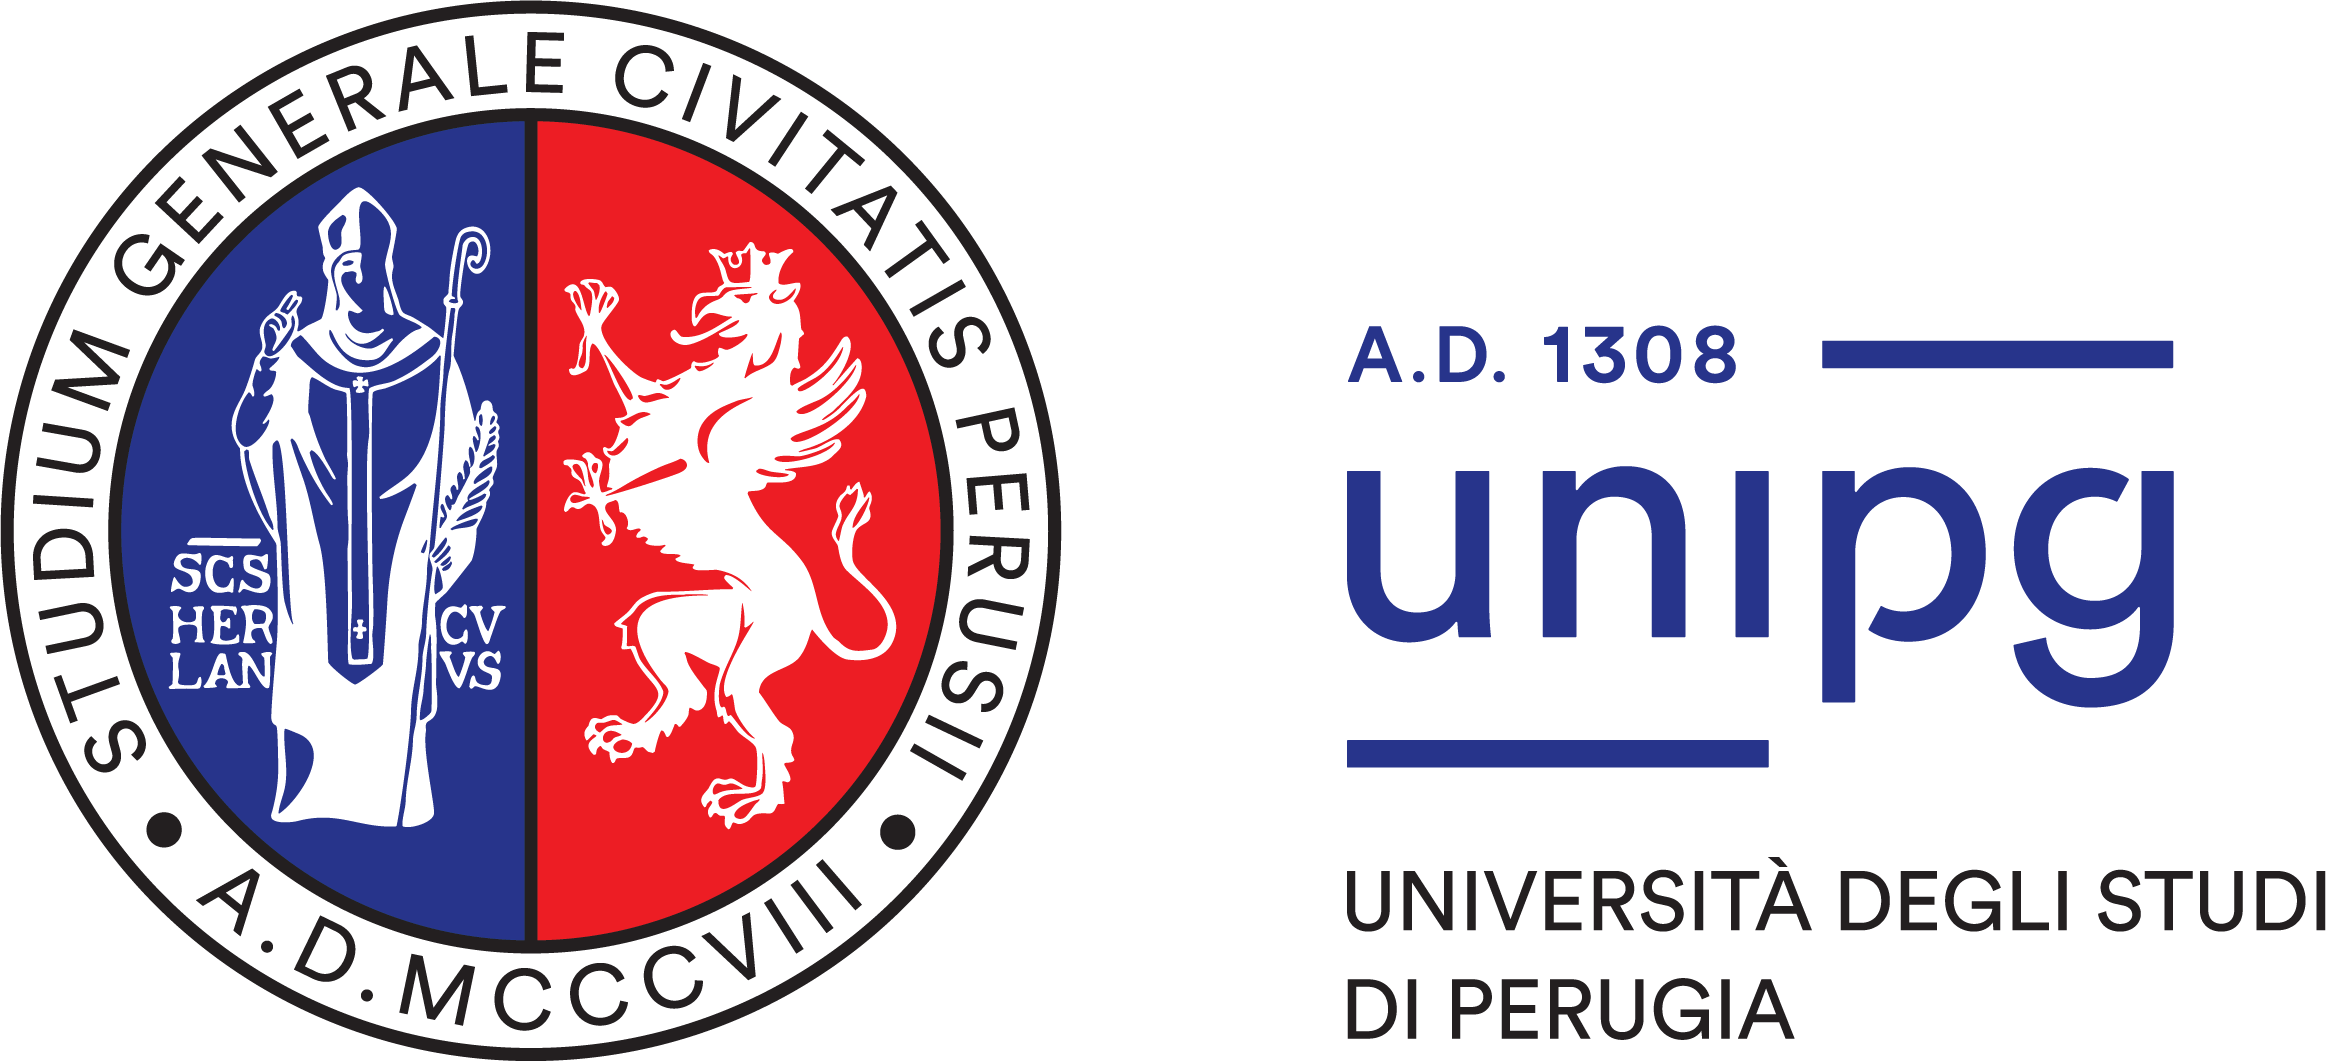 University of Perugia logo